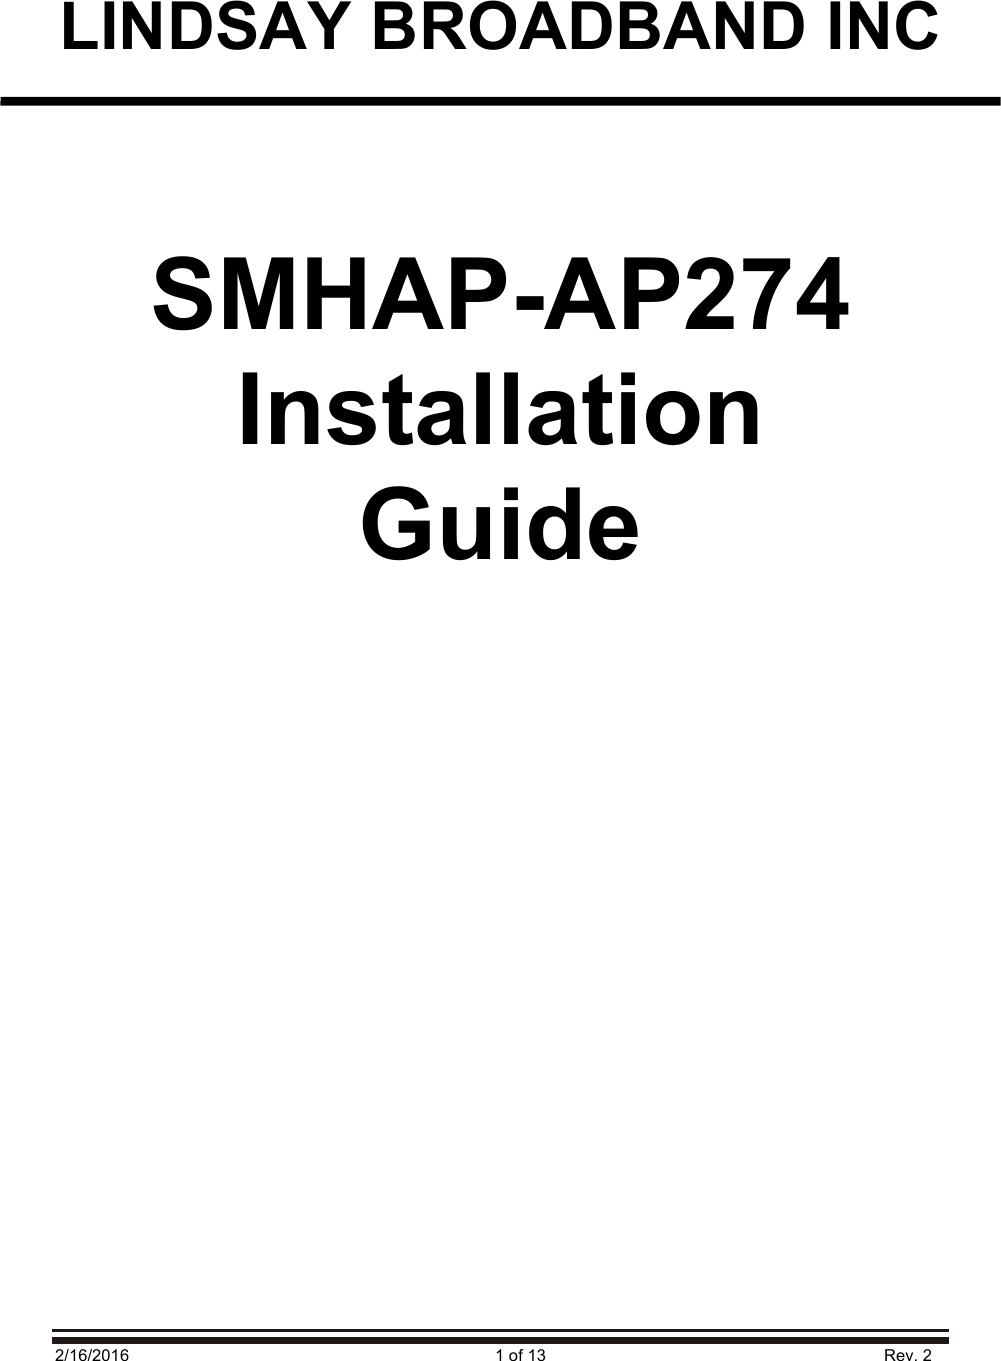  2/16/2016                                                                               1 of 13                                                                         Rev. 2 LINDSAY BROADBAND INC   SMHAP-AP274 Installation Guide   